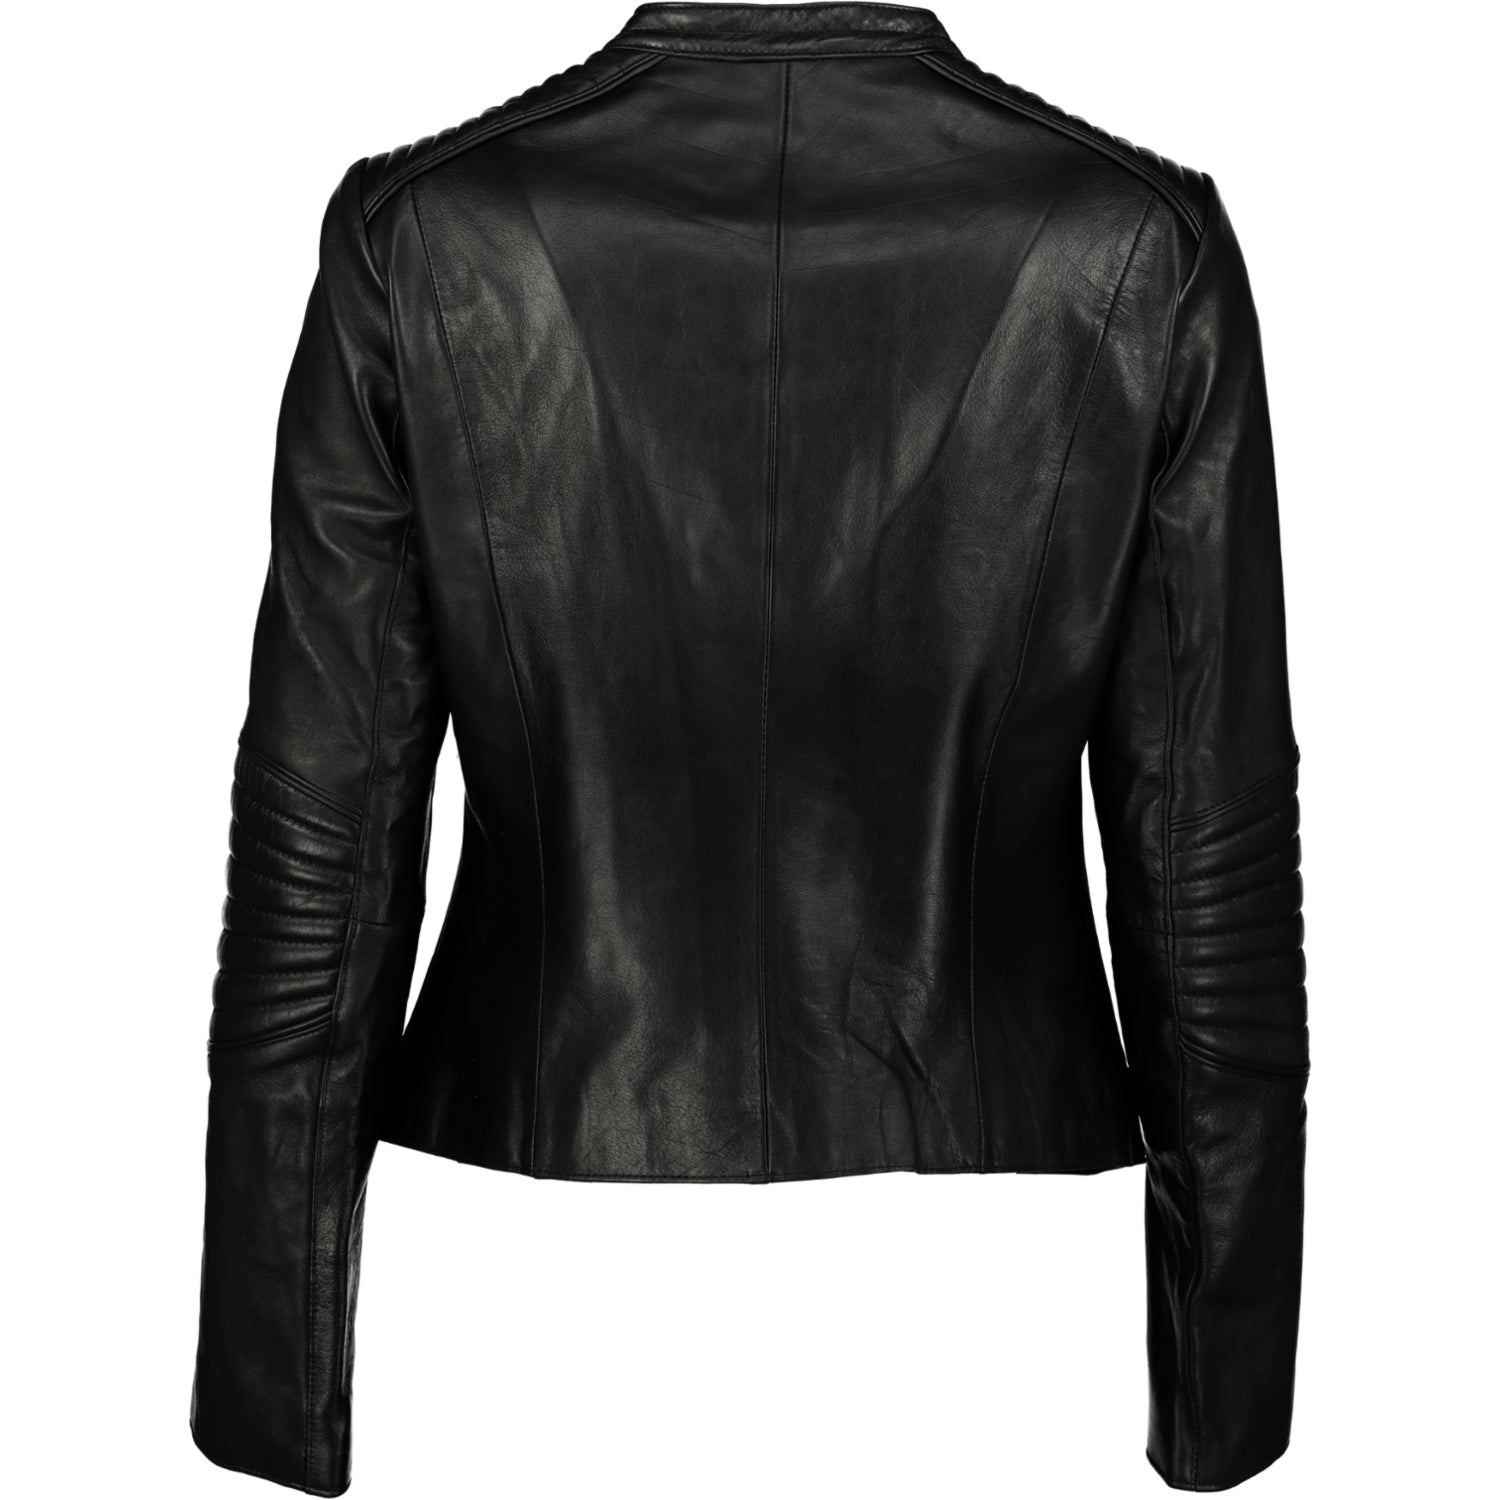 Women's Moto Black Slim Fit 100% Napa Leather Jacket - Supreme Leather - Supreme Leather Supply 